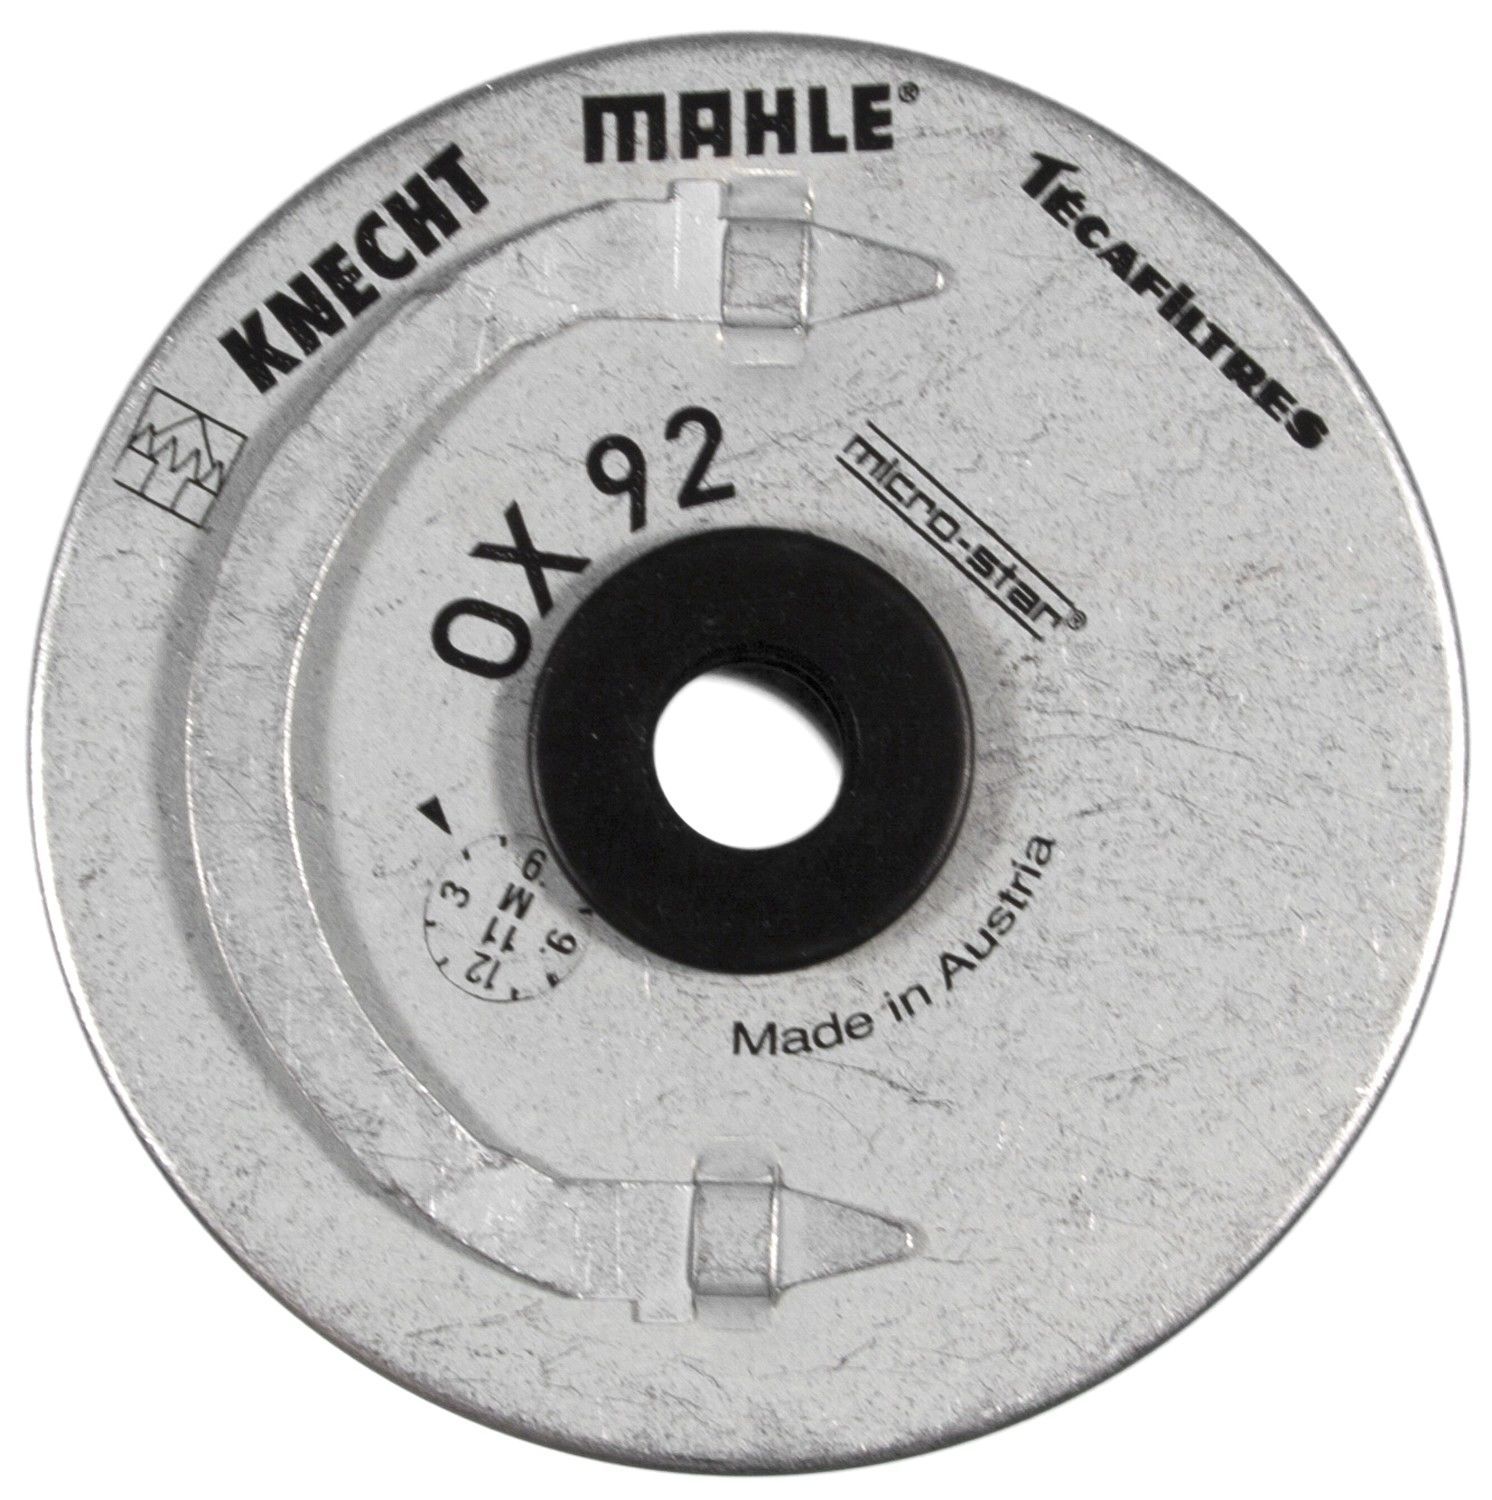 MAHLE ORIGINAL - Engine Oil Filter Element - MHL OX 92D